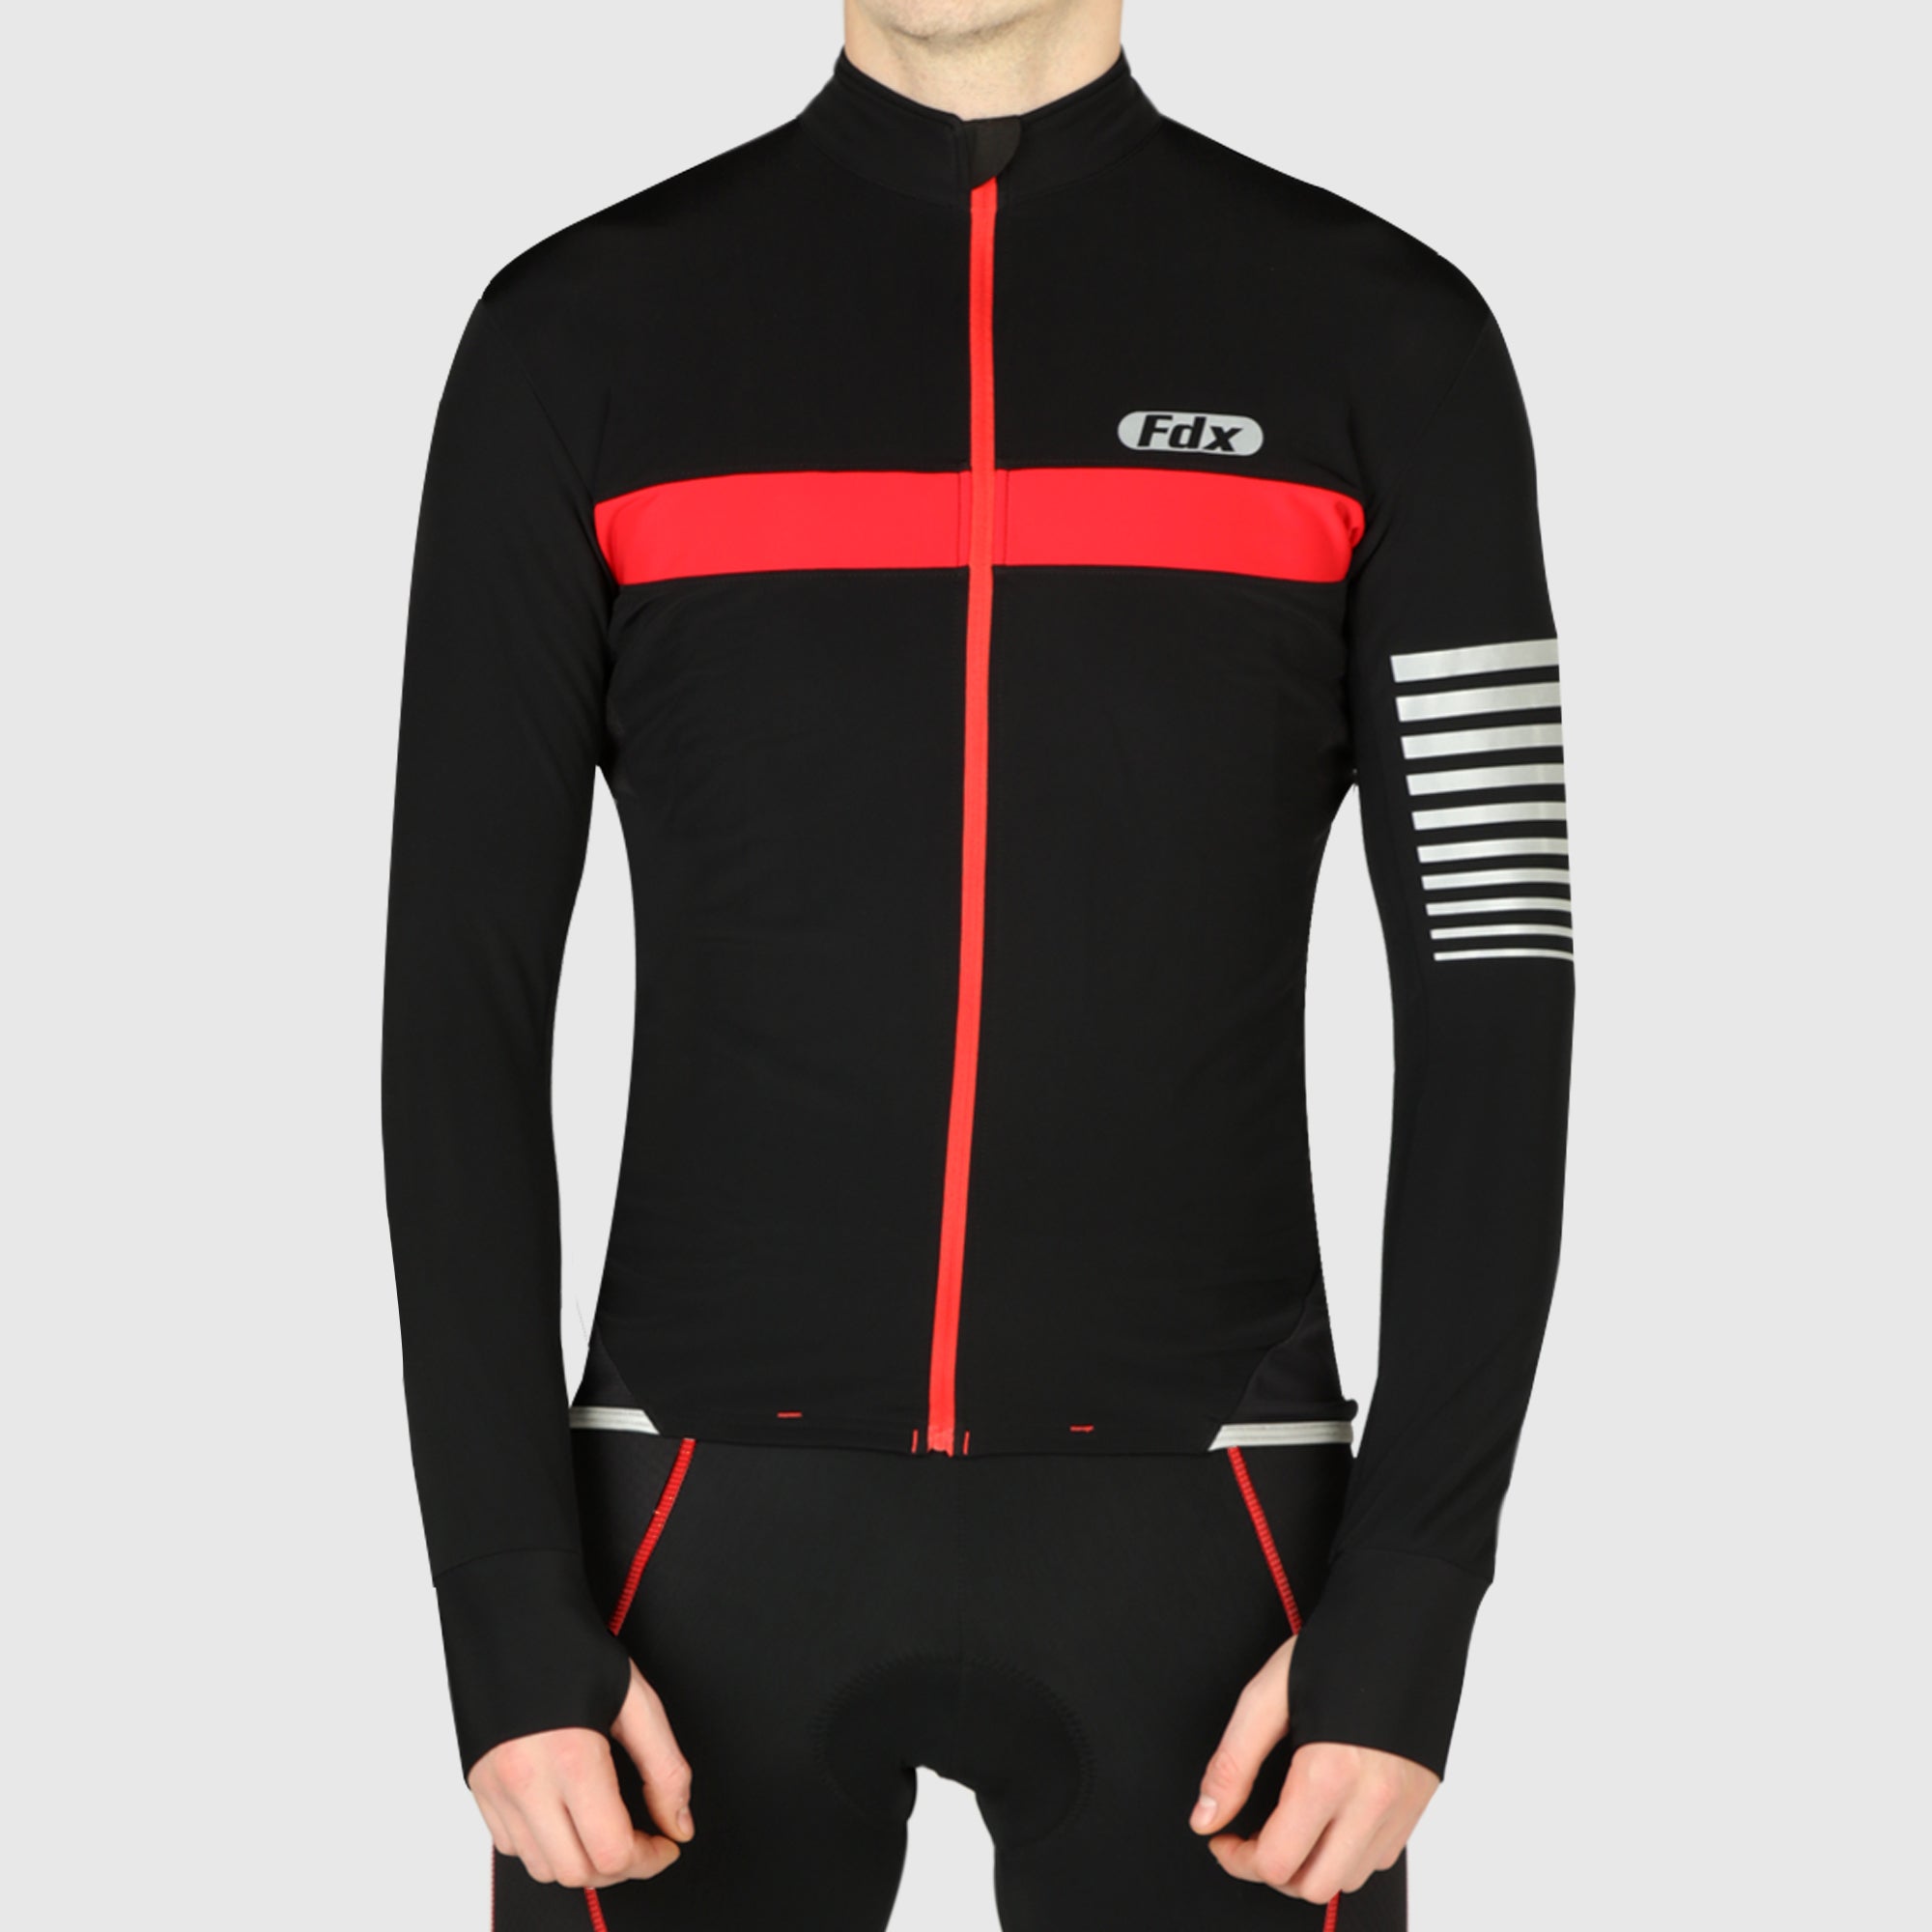 Fdx Mens Black & Red Long Sleeve Cycling Jersey & Gel Padded Bib Tights Pants for Winter Roubaix Thermal Fleece Road Bike Wear Windproof, Hi-viz Reflectors & Pockets - All Day